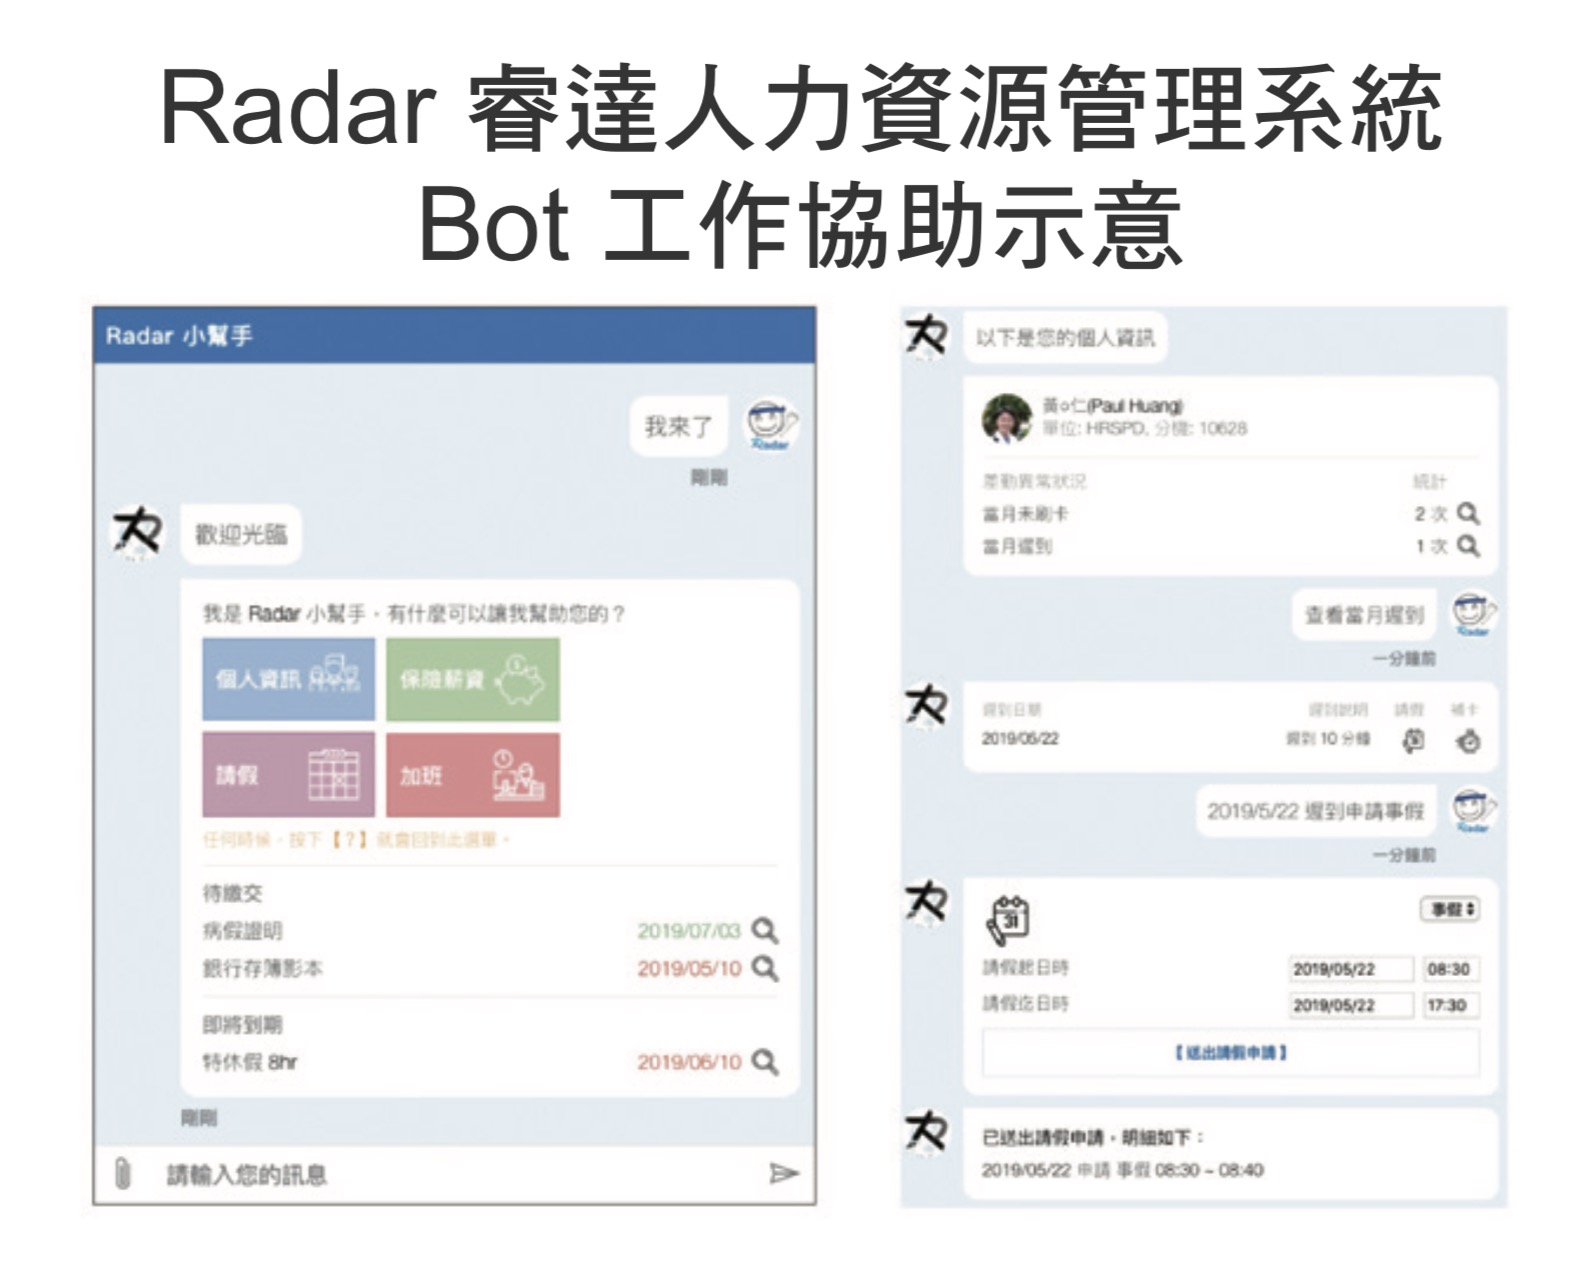 Radar 睿達人力資源管理系統 Bot 工作協助示意